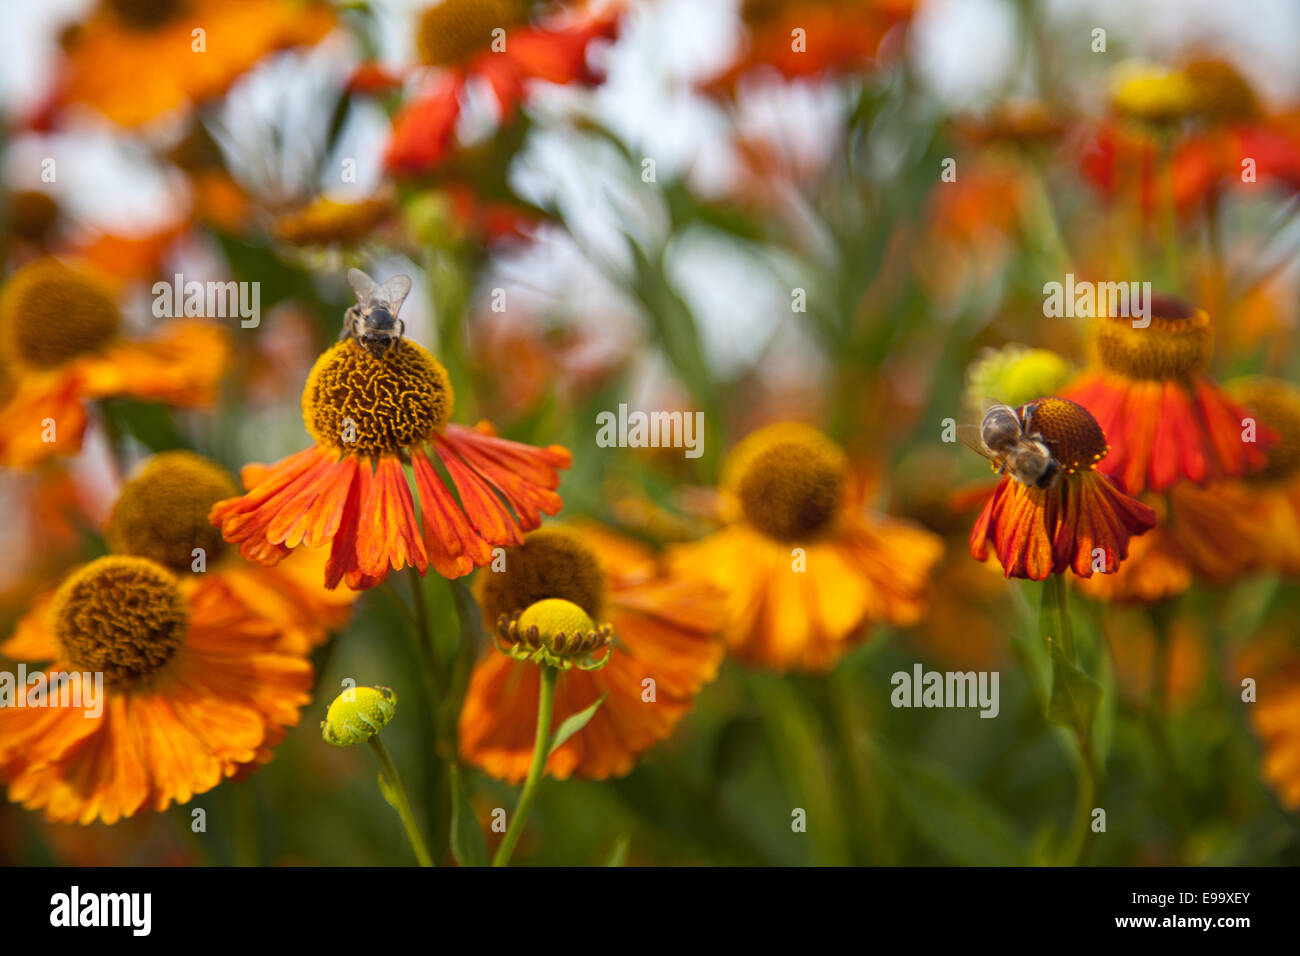 Sneezeweed / Helenium with bee Stock Photo